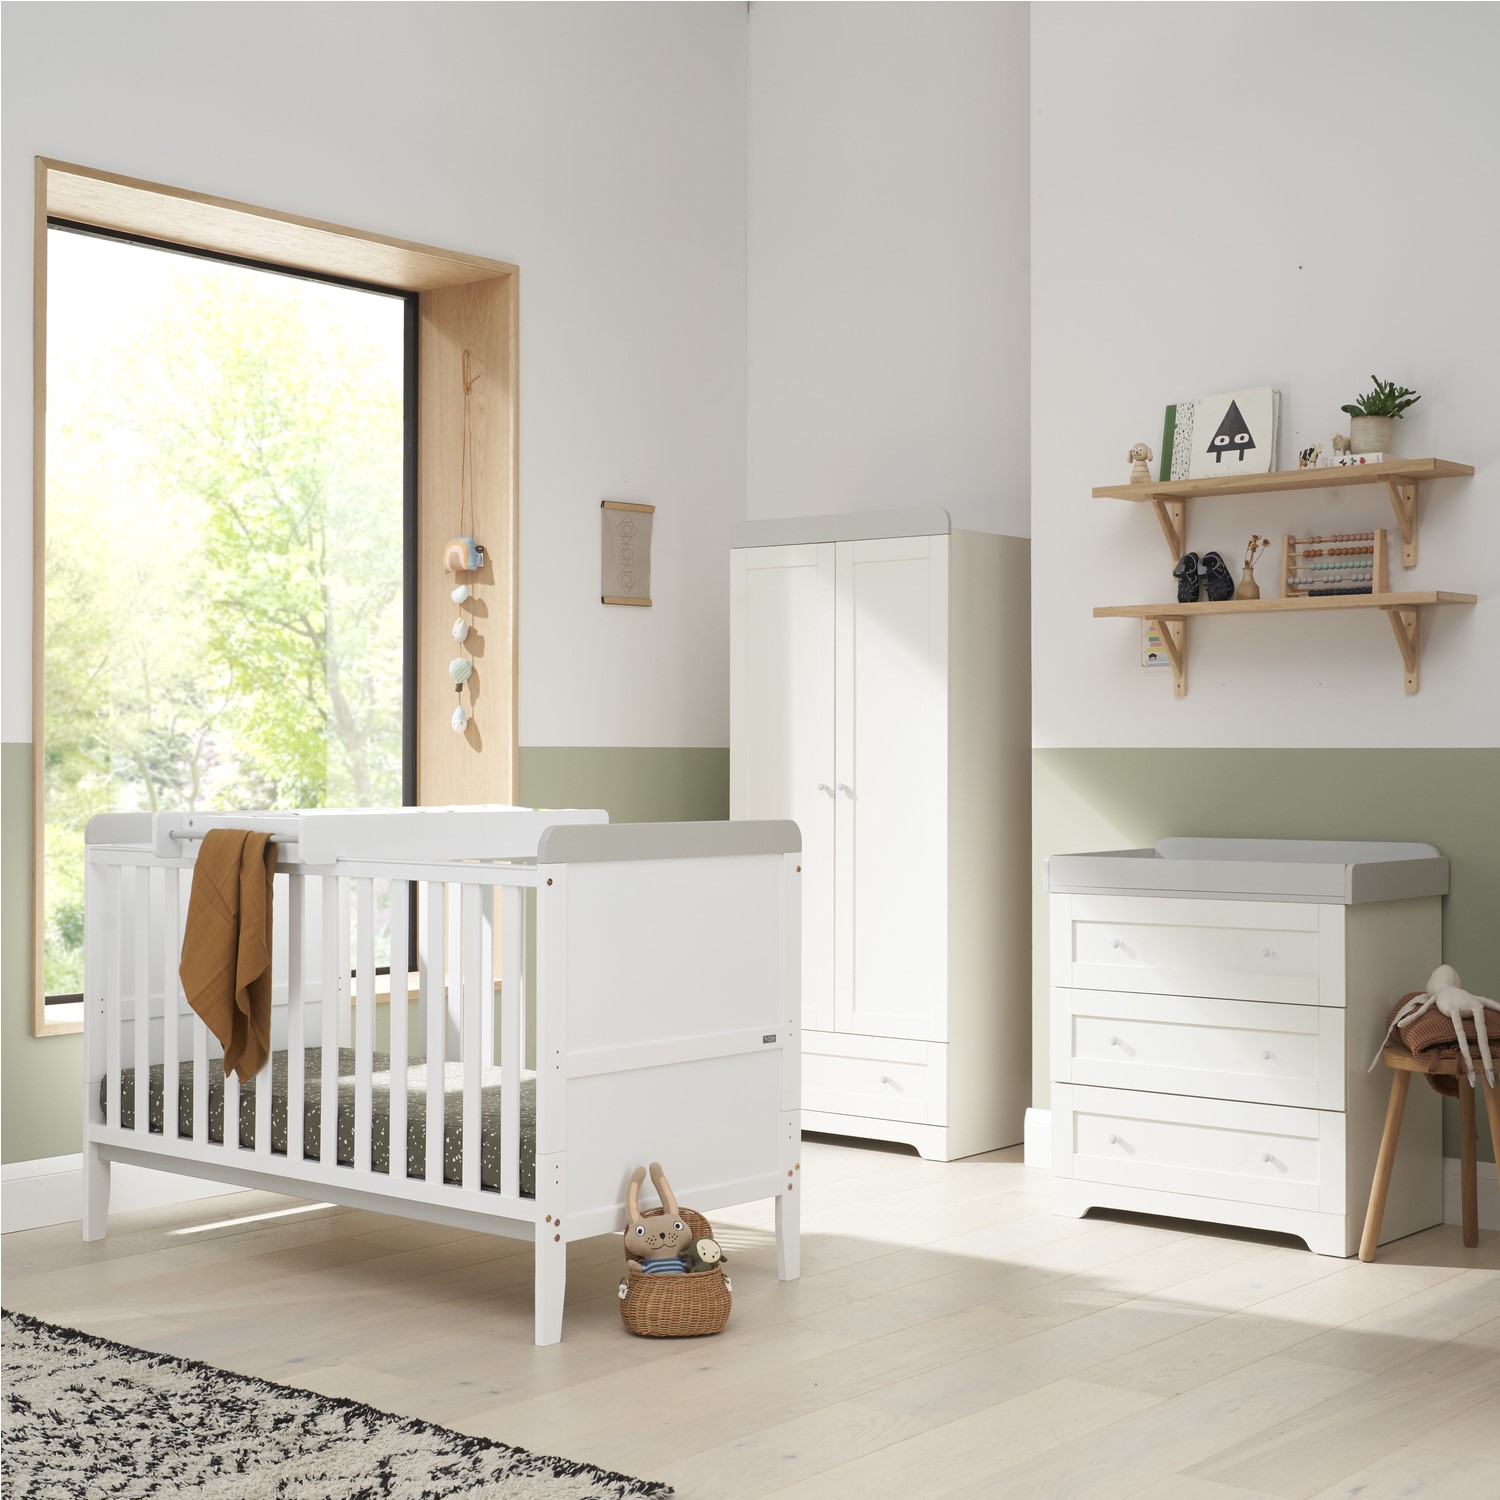 Photo of 3 piece nursery furniture set in white and grey - rio - tutti bambini